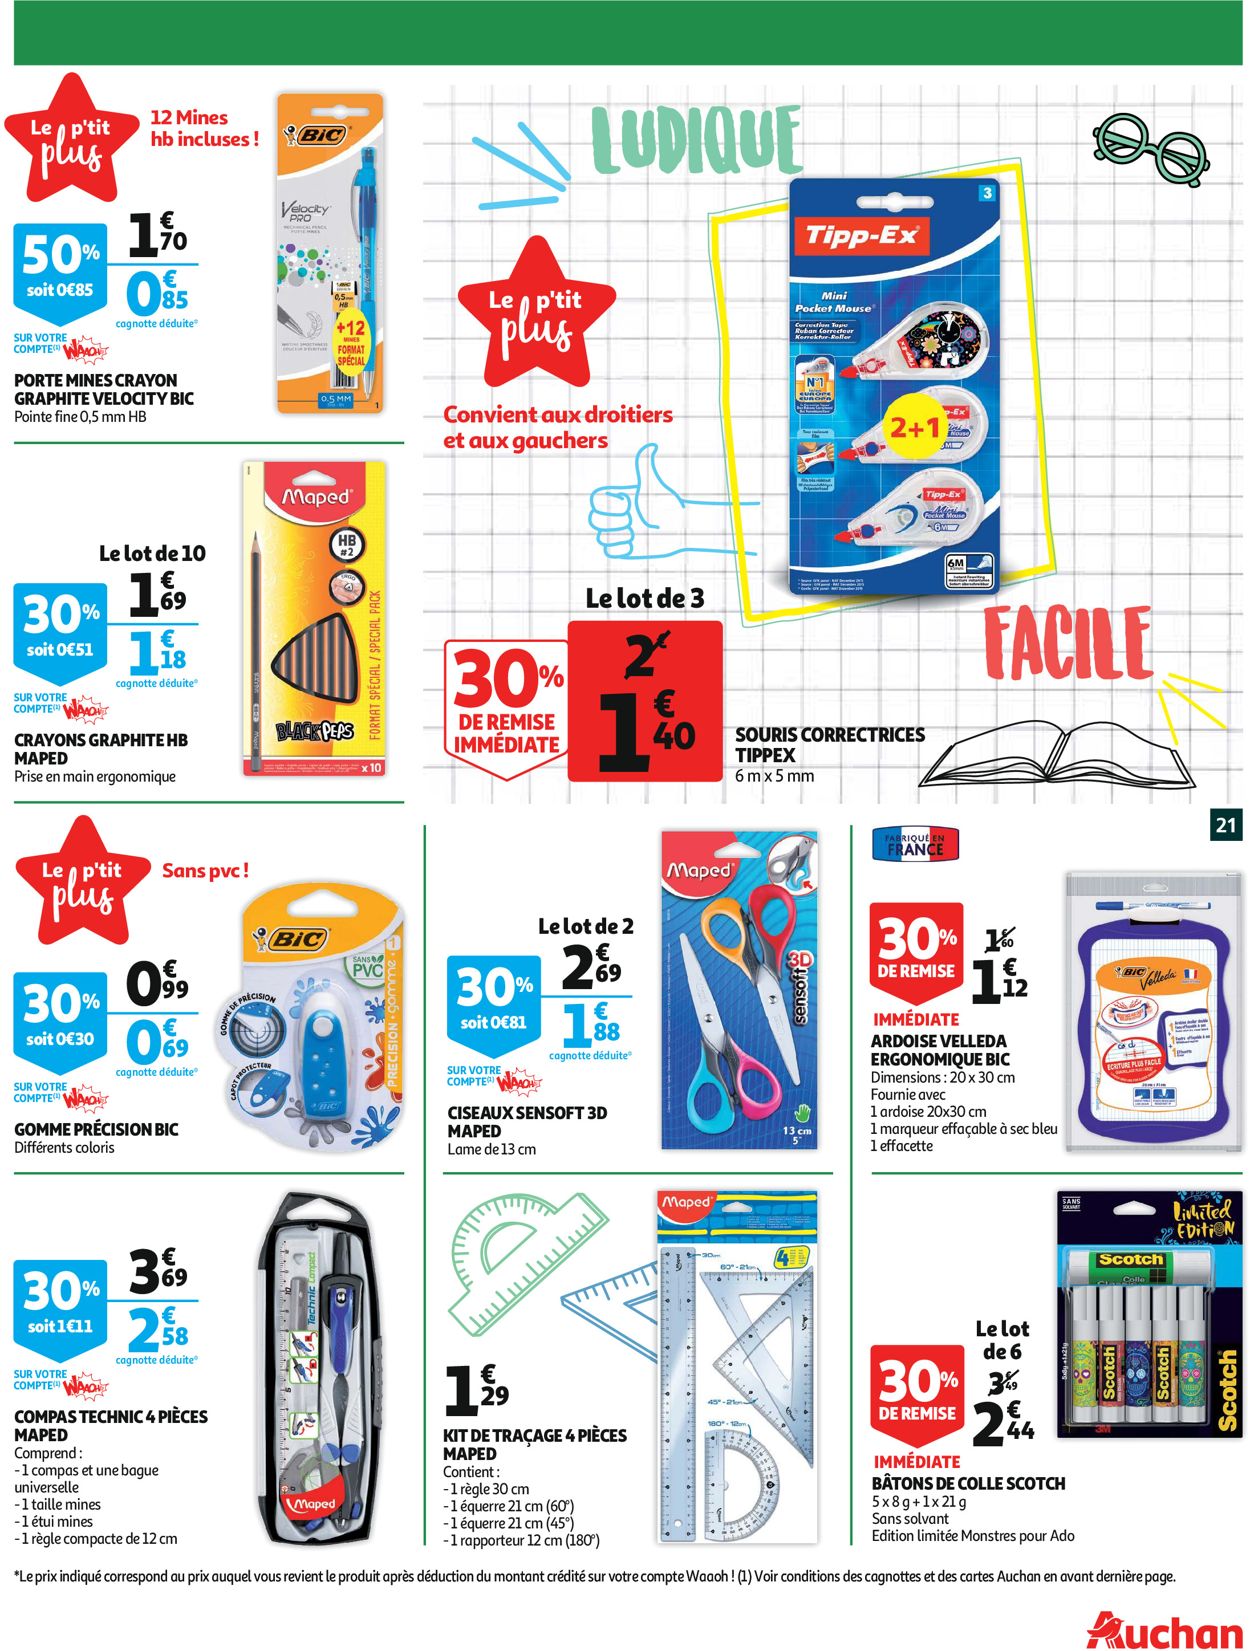 Auchan Catalogue - 17.07-27.07.2019 (Page 21)